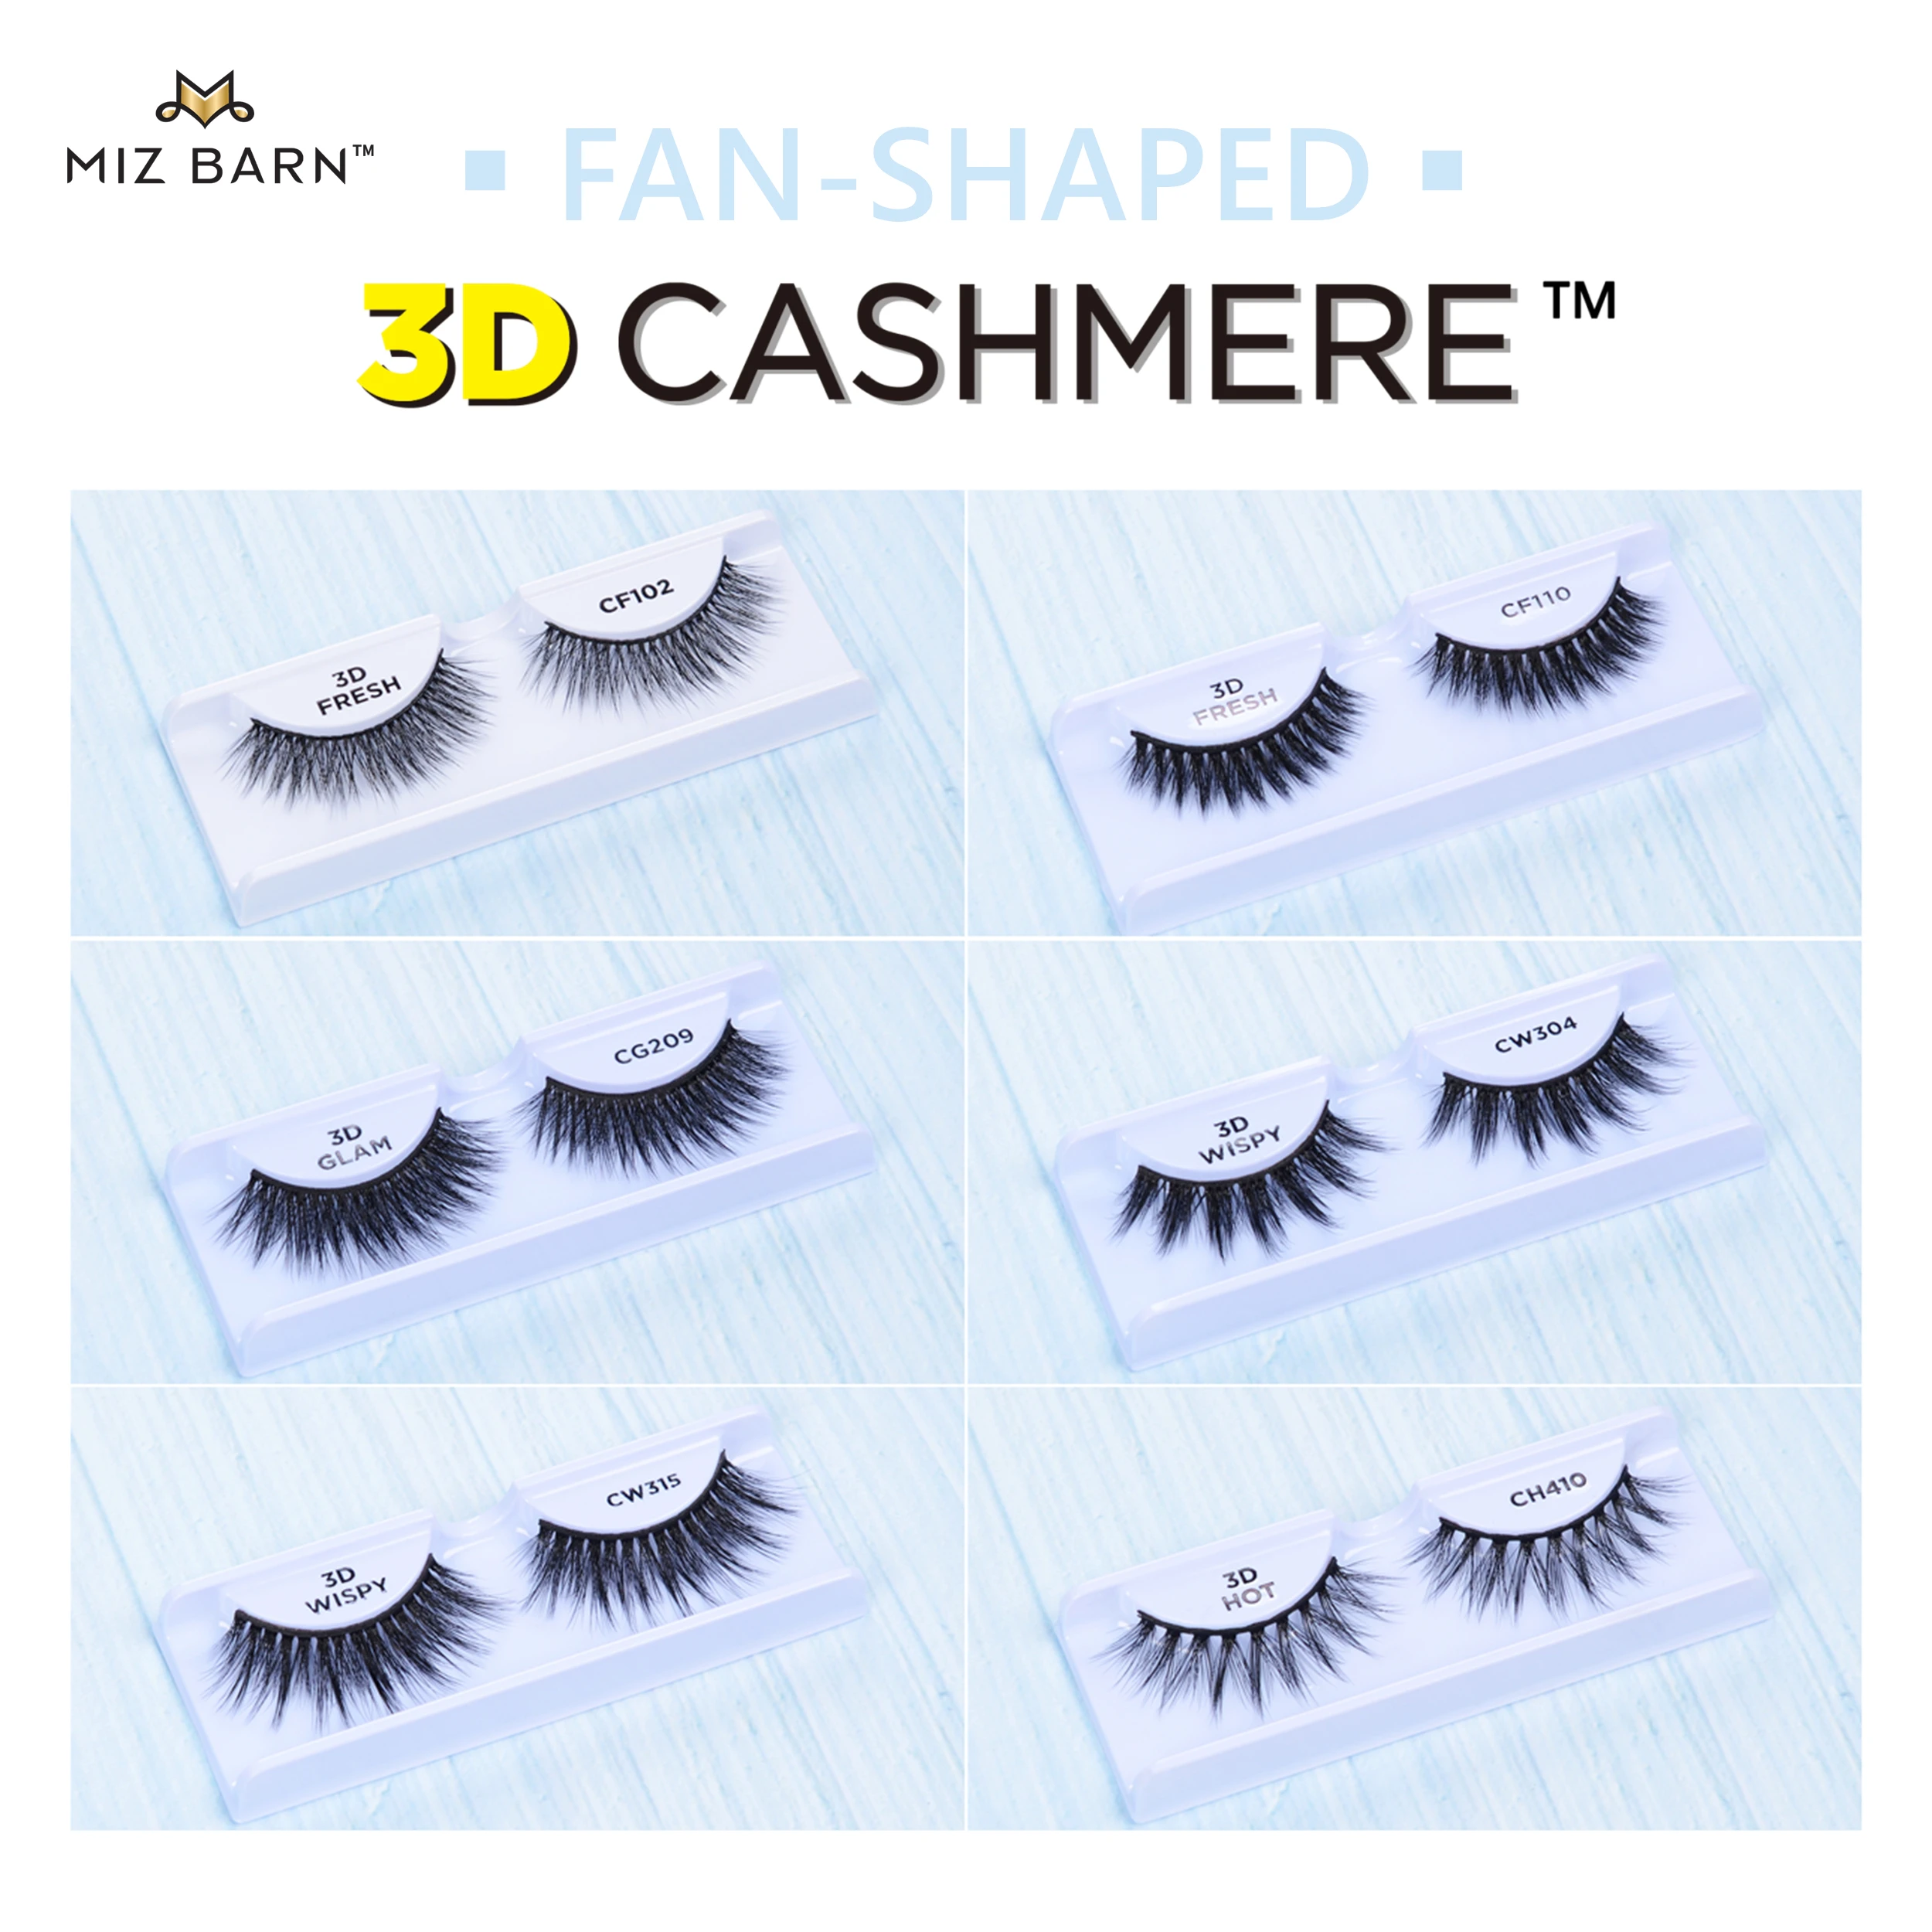 

MIZ BARN Fan-Shaped 3D CASHMERE Makeup Eyelashes Fluffy Natural Fake Lashes Reusable Soft Faux Mink Lash Wispy Cross Eyelash Cil